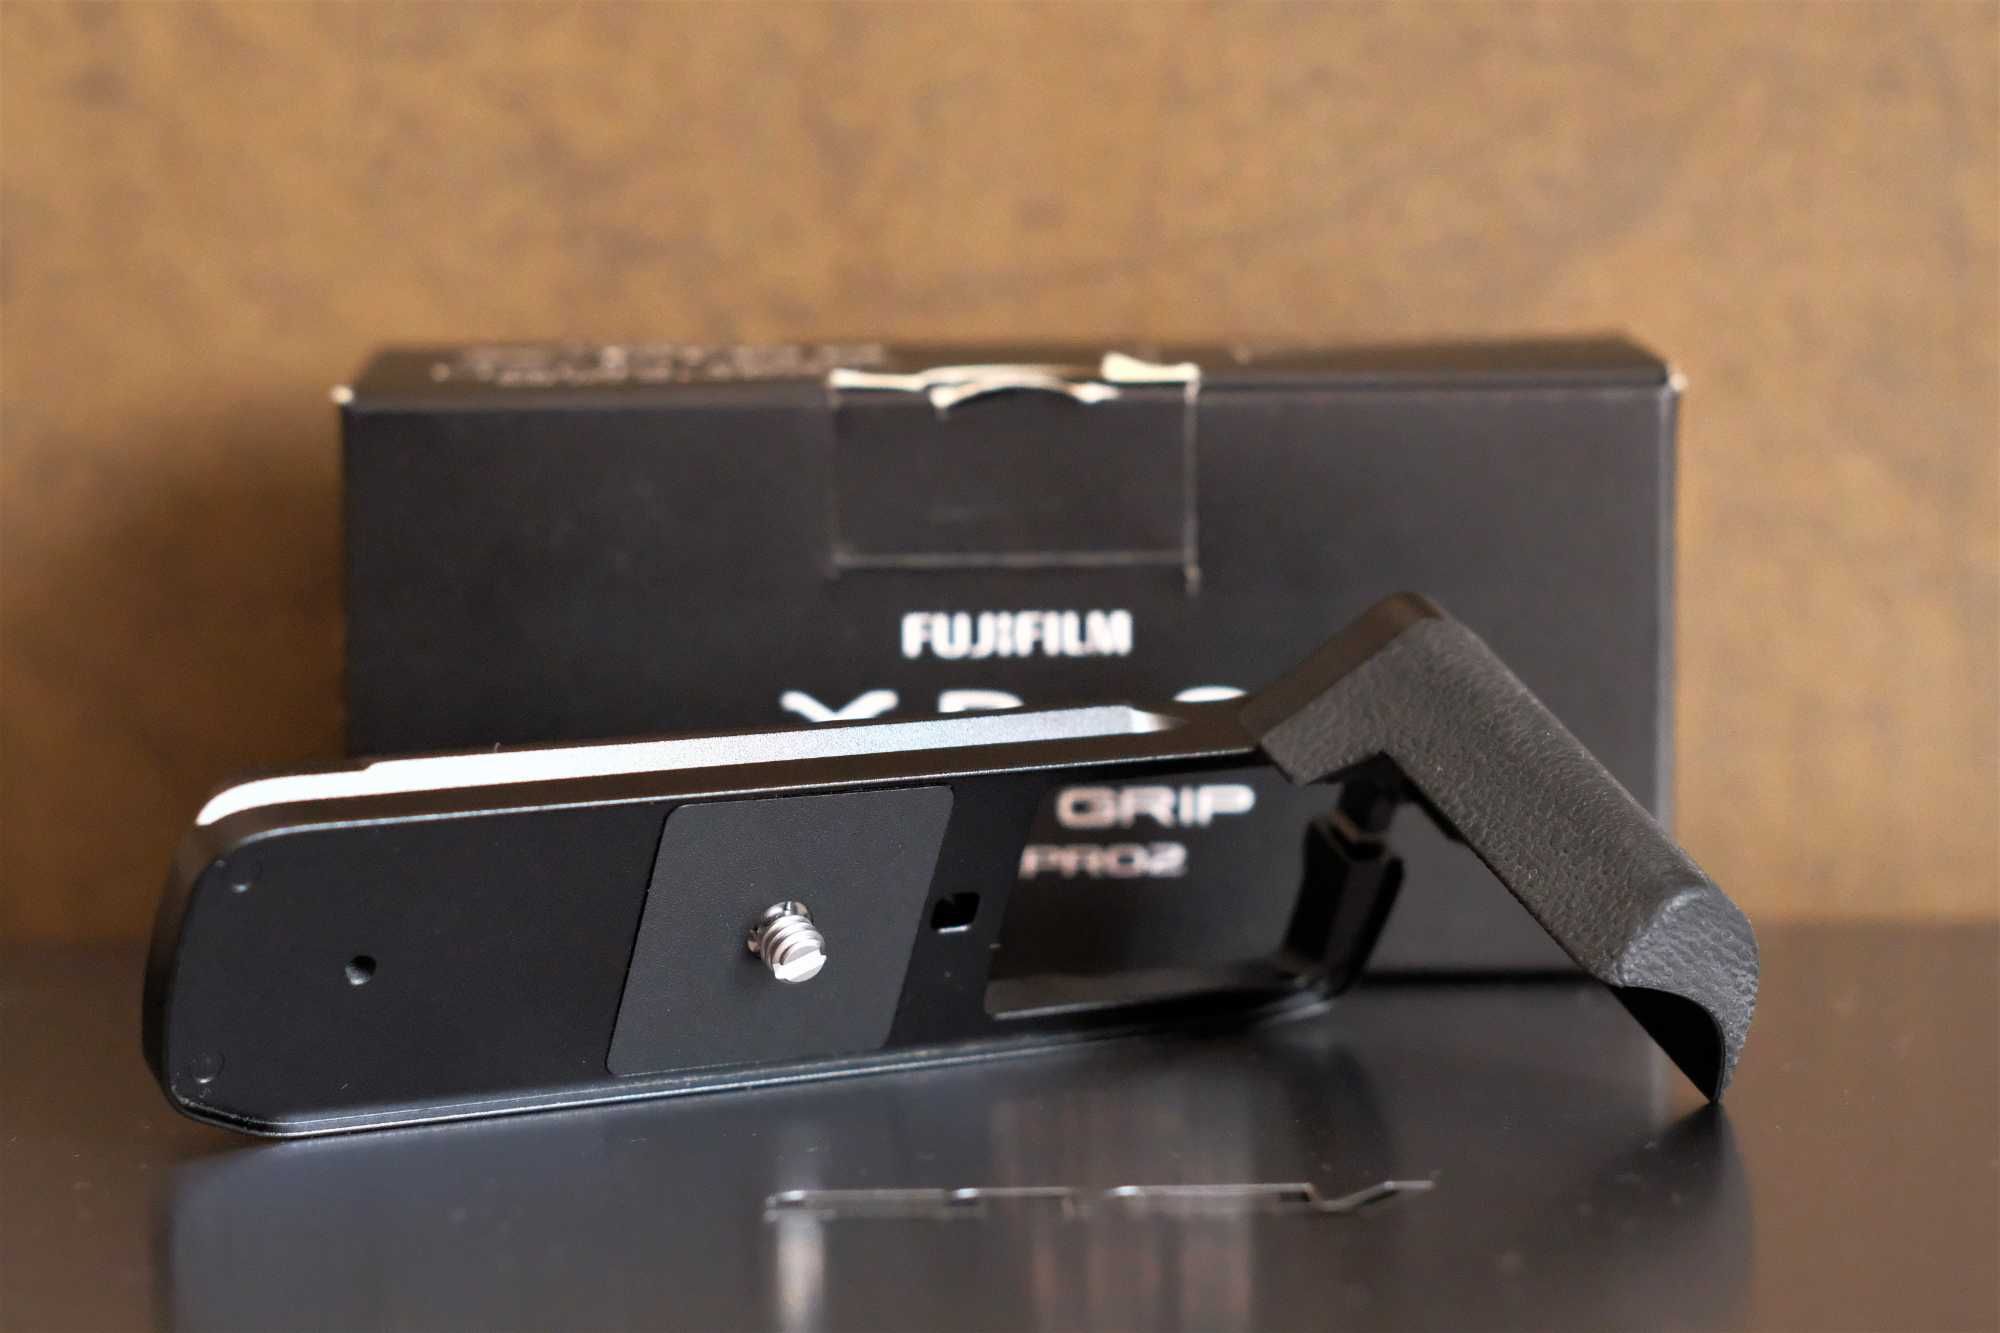 Хват ручка Fujifilm x pro2 Hard grip